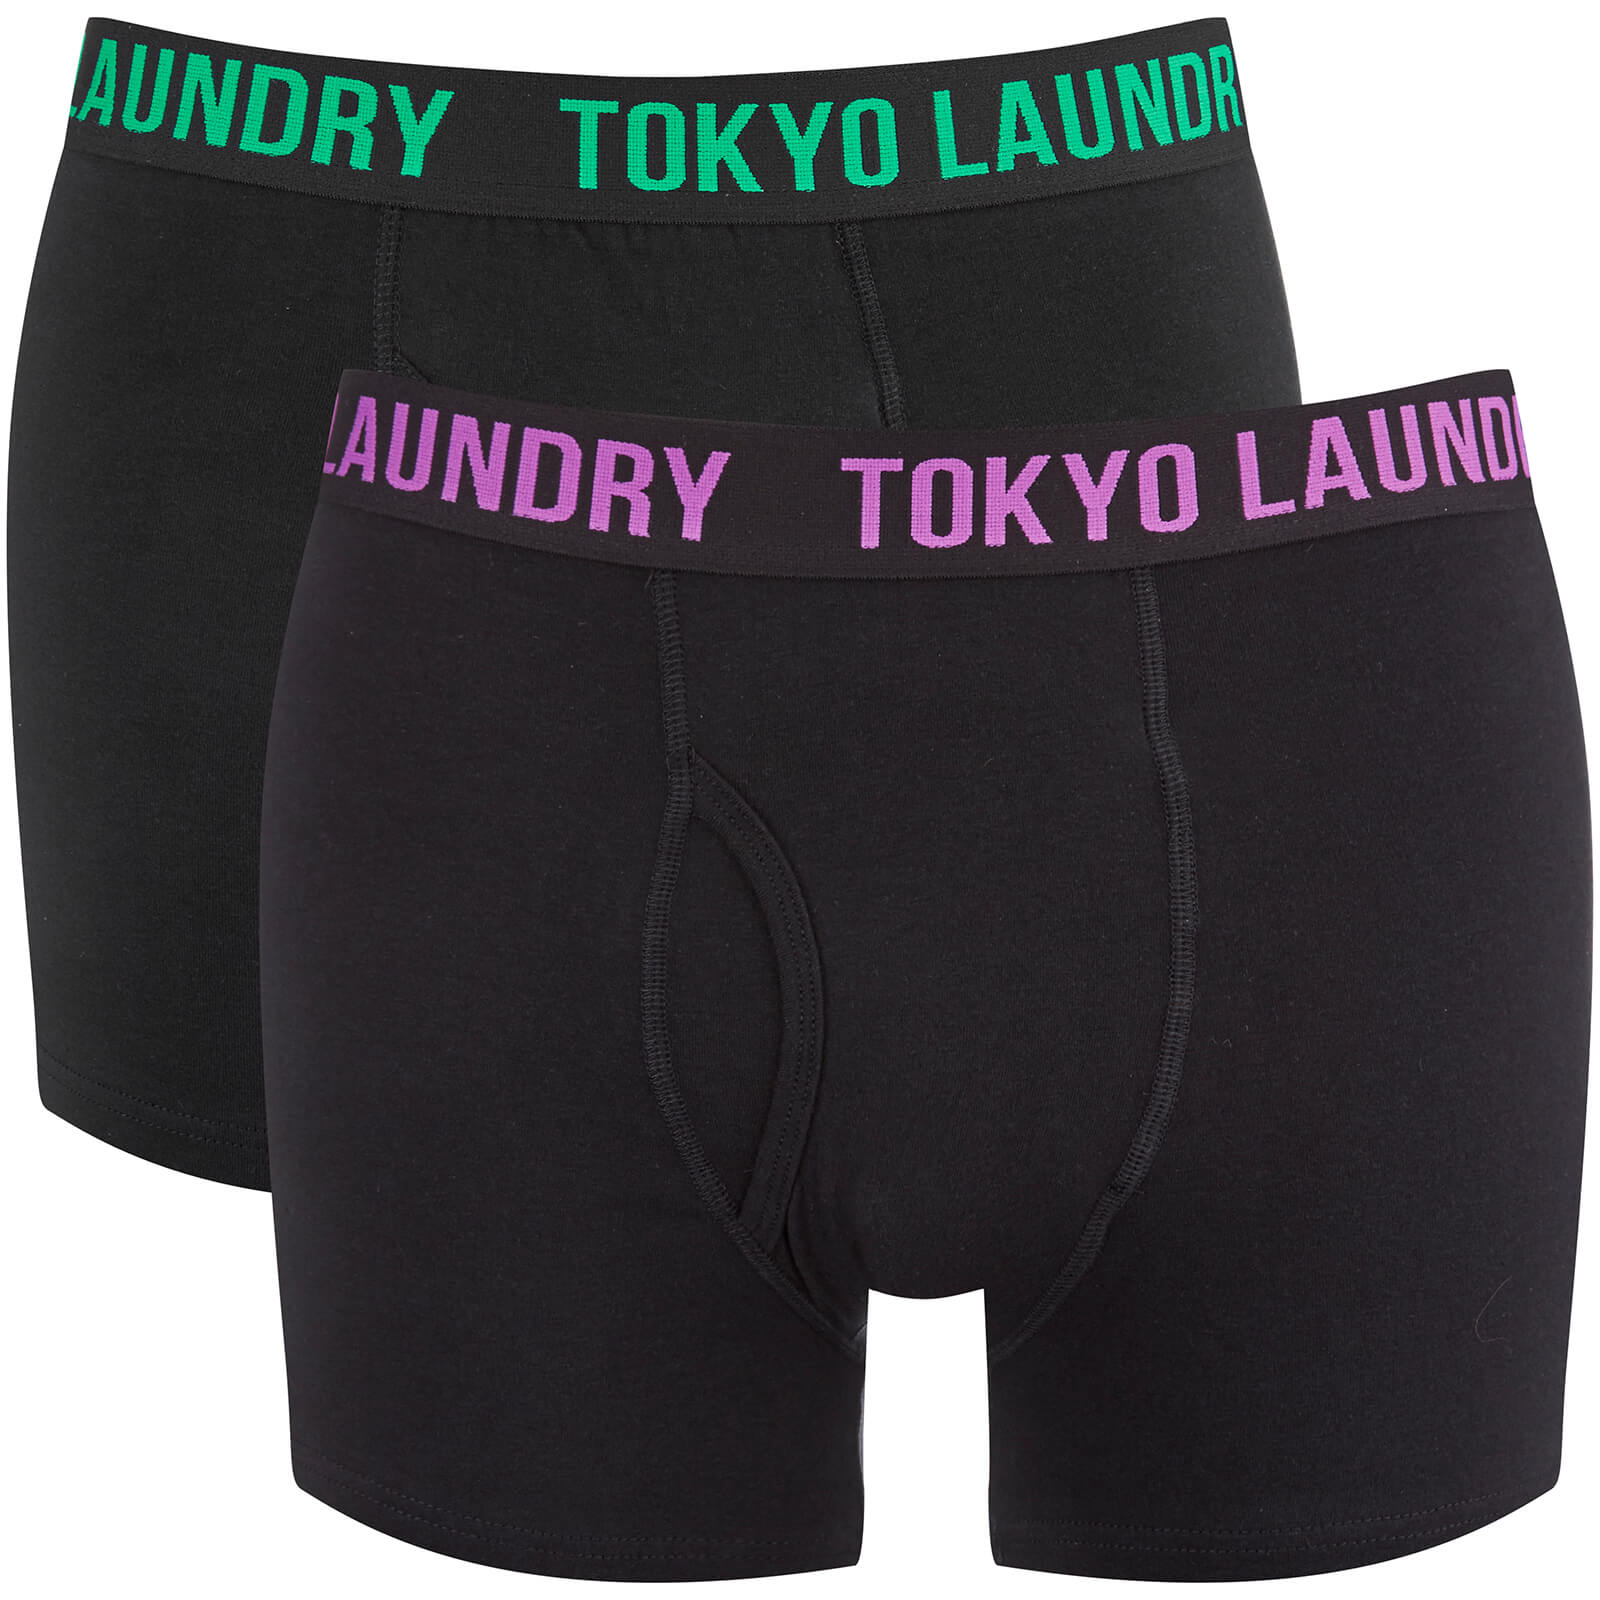 Tokyo Laundry Men's Dovehouse 2 Pack Boxers - Black/Green/Dewberry Mens ...